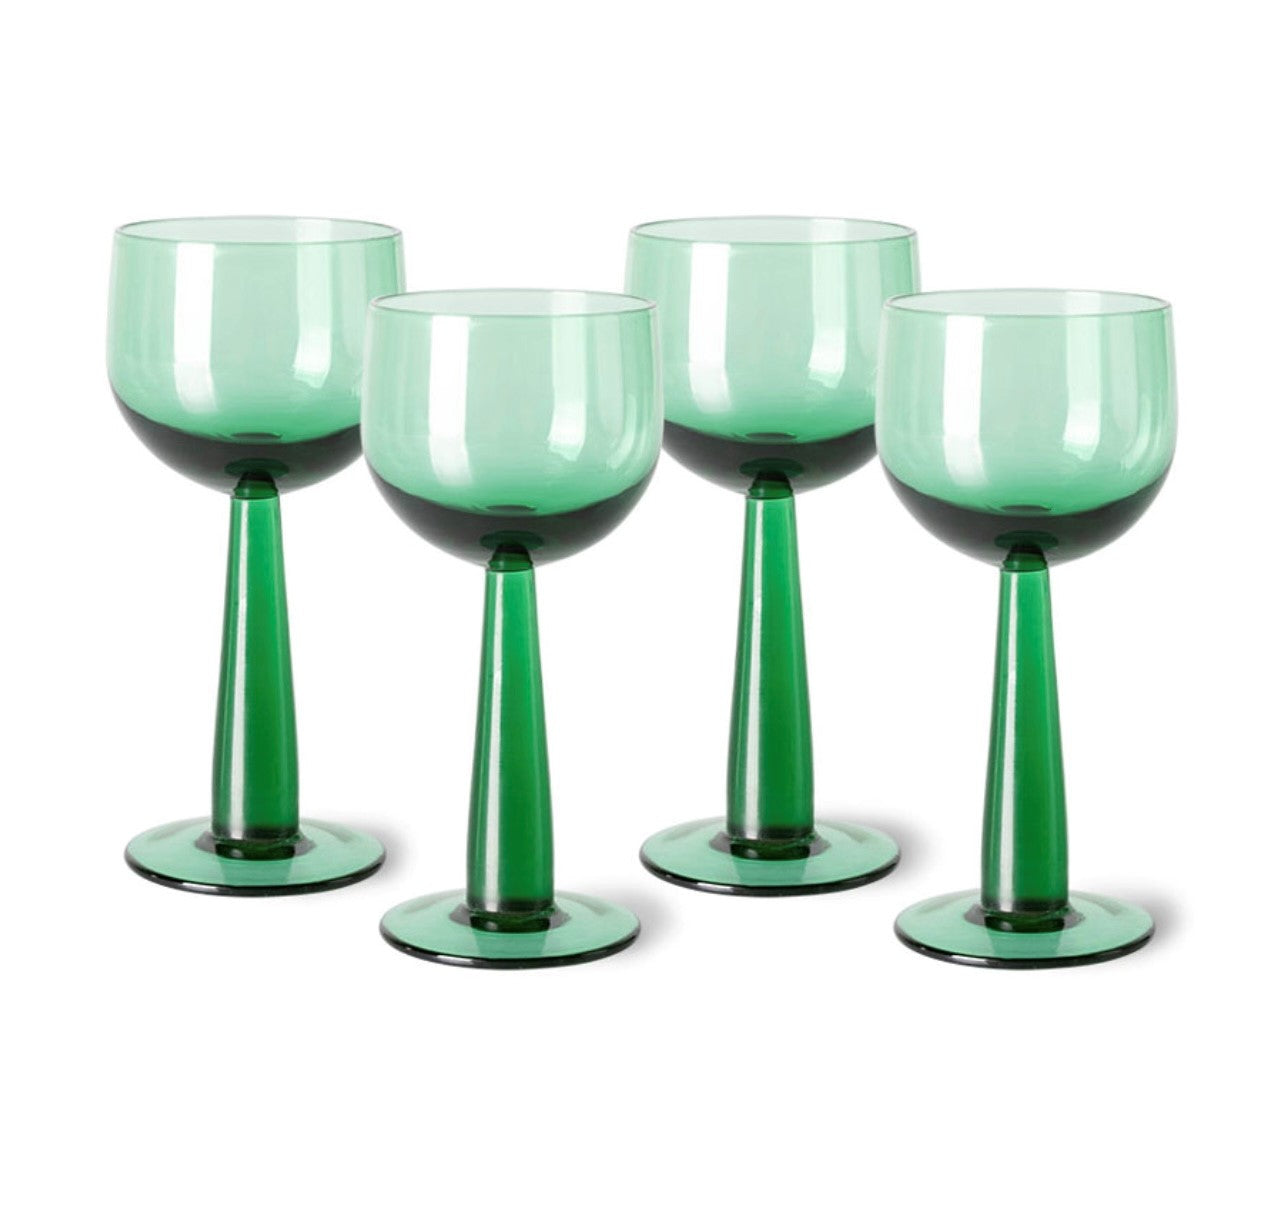 4 fern green colored high stem wine glasses